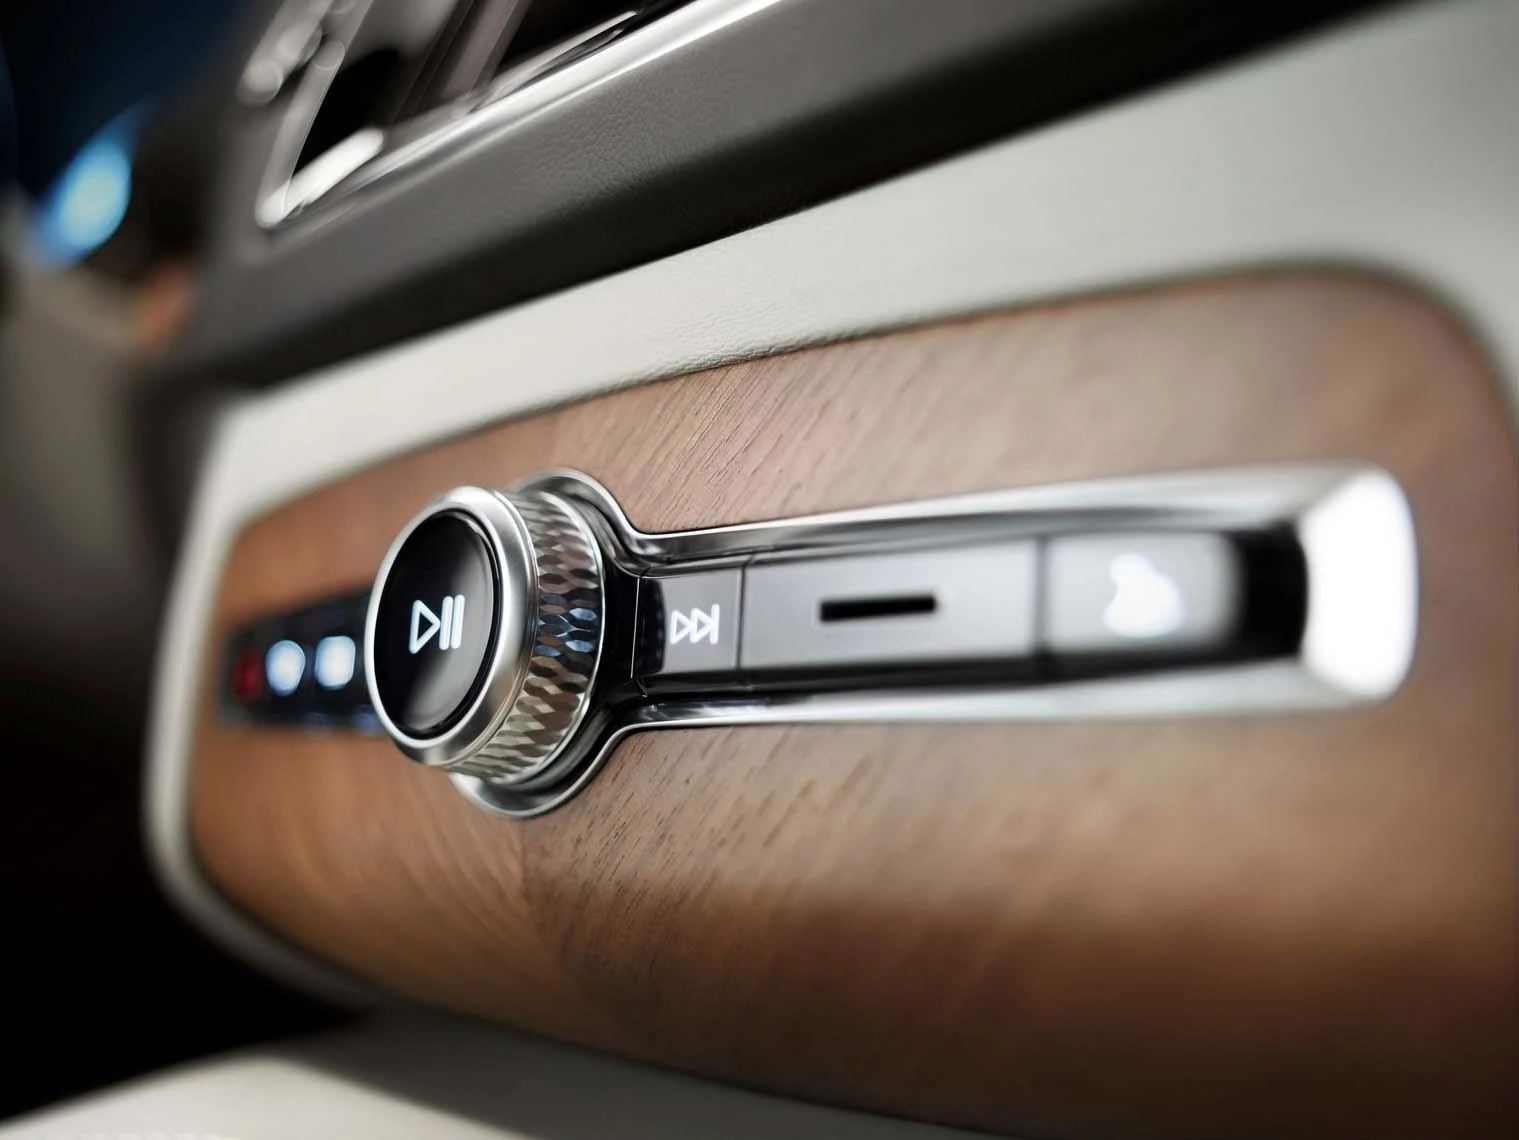 Volvo Xc90 2018 Interior Suv Luksus Anlaeg Hifi Lyd Overdaadig